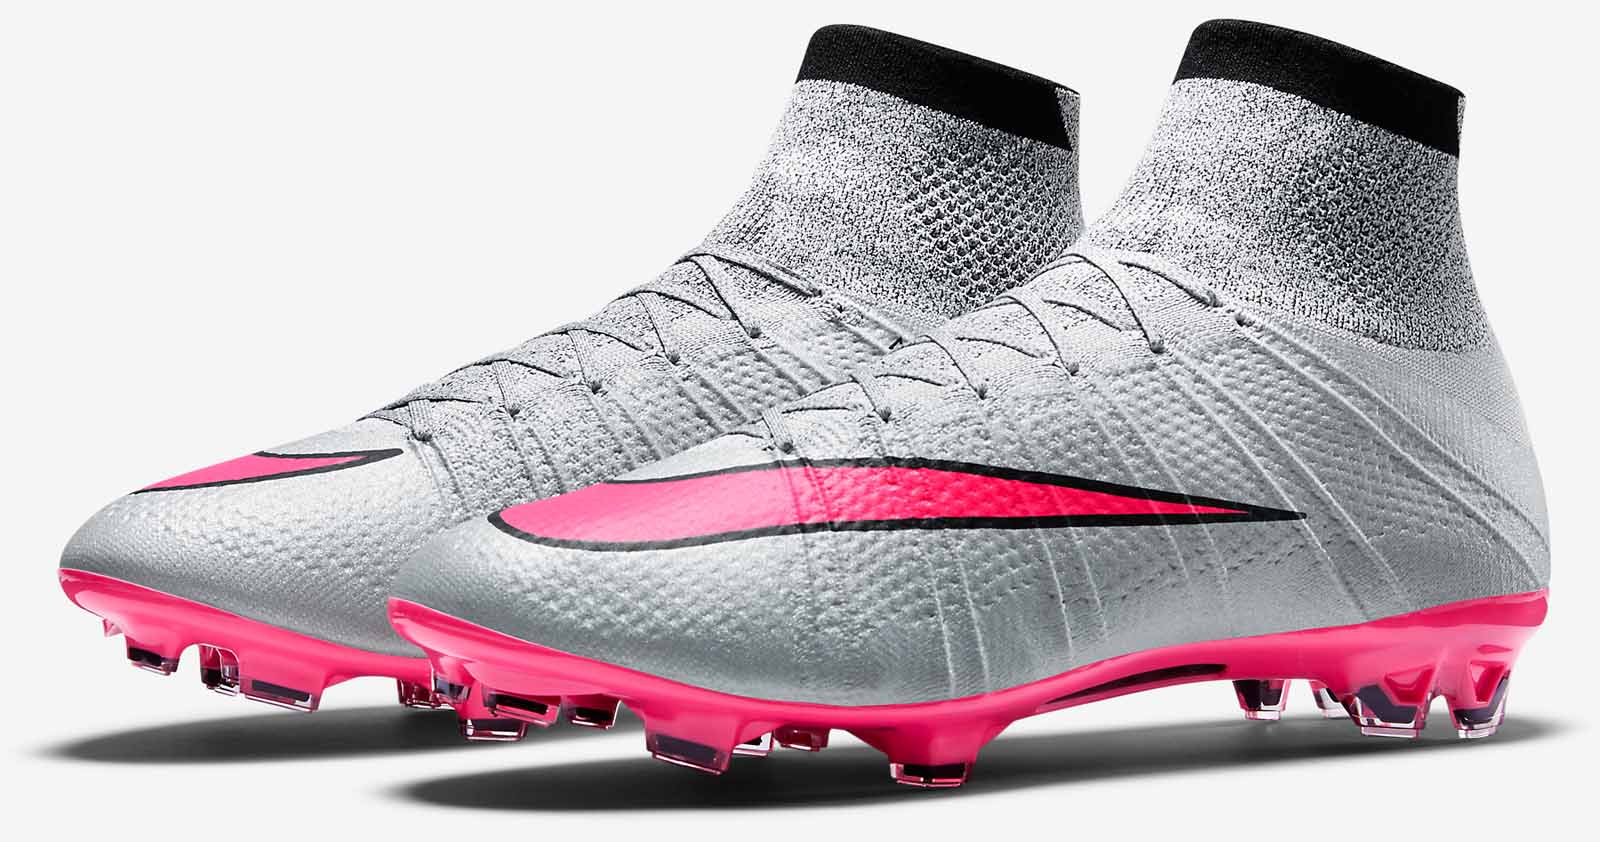 Asociación Luna Padre fage Grey / Pink Nike Mercurial Superfly 2015 Boots Released - Footy Headlines